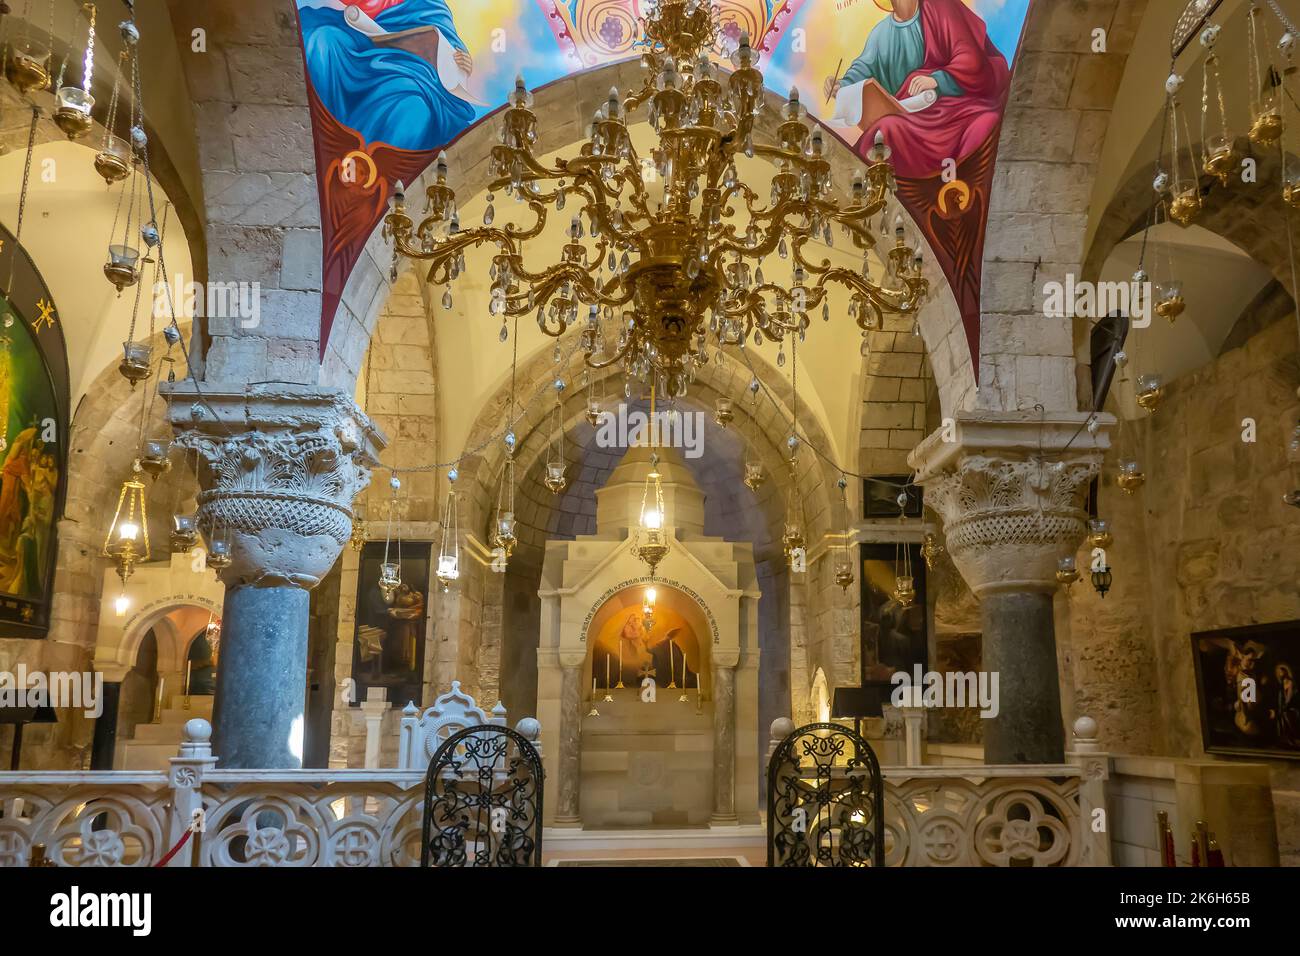 Israel, Jerusalén, iglesia del Santo Sepulcro, interior, Capilla Armenia de Santa Elena Foto de stock